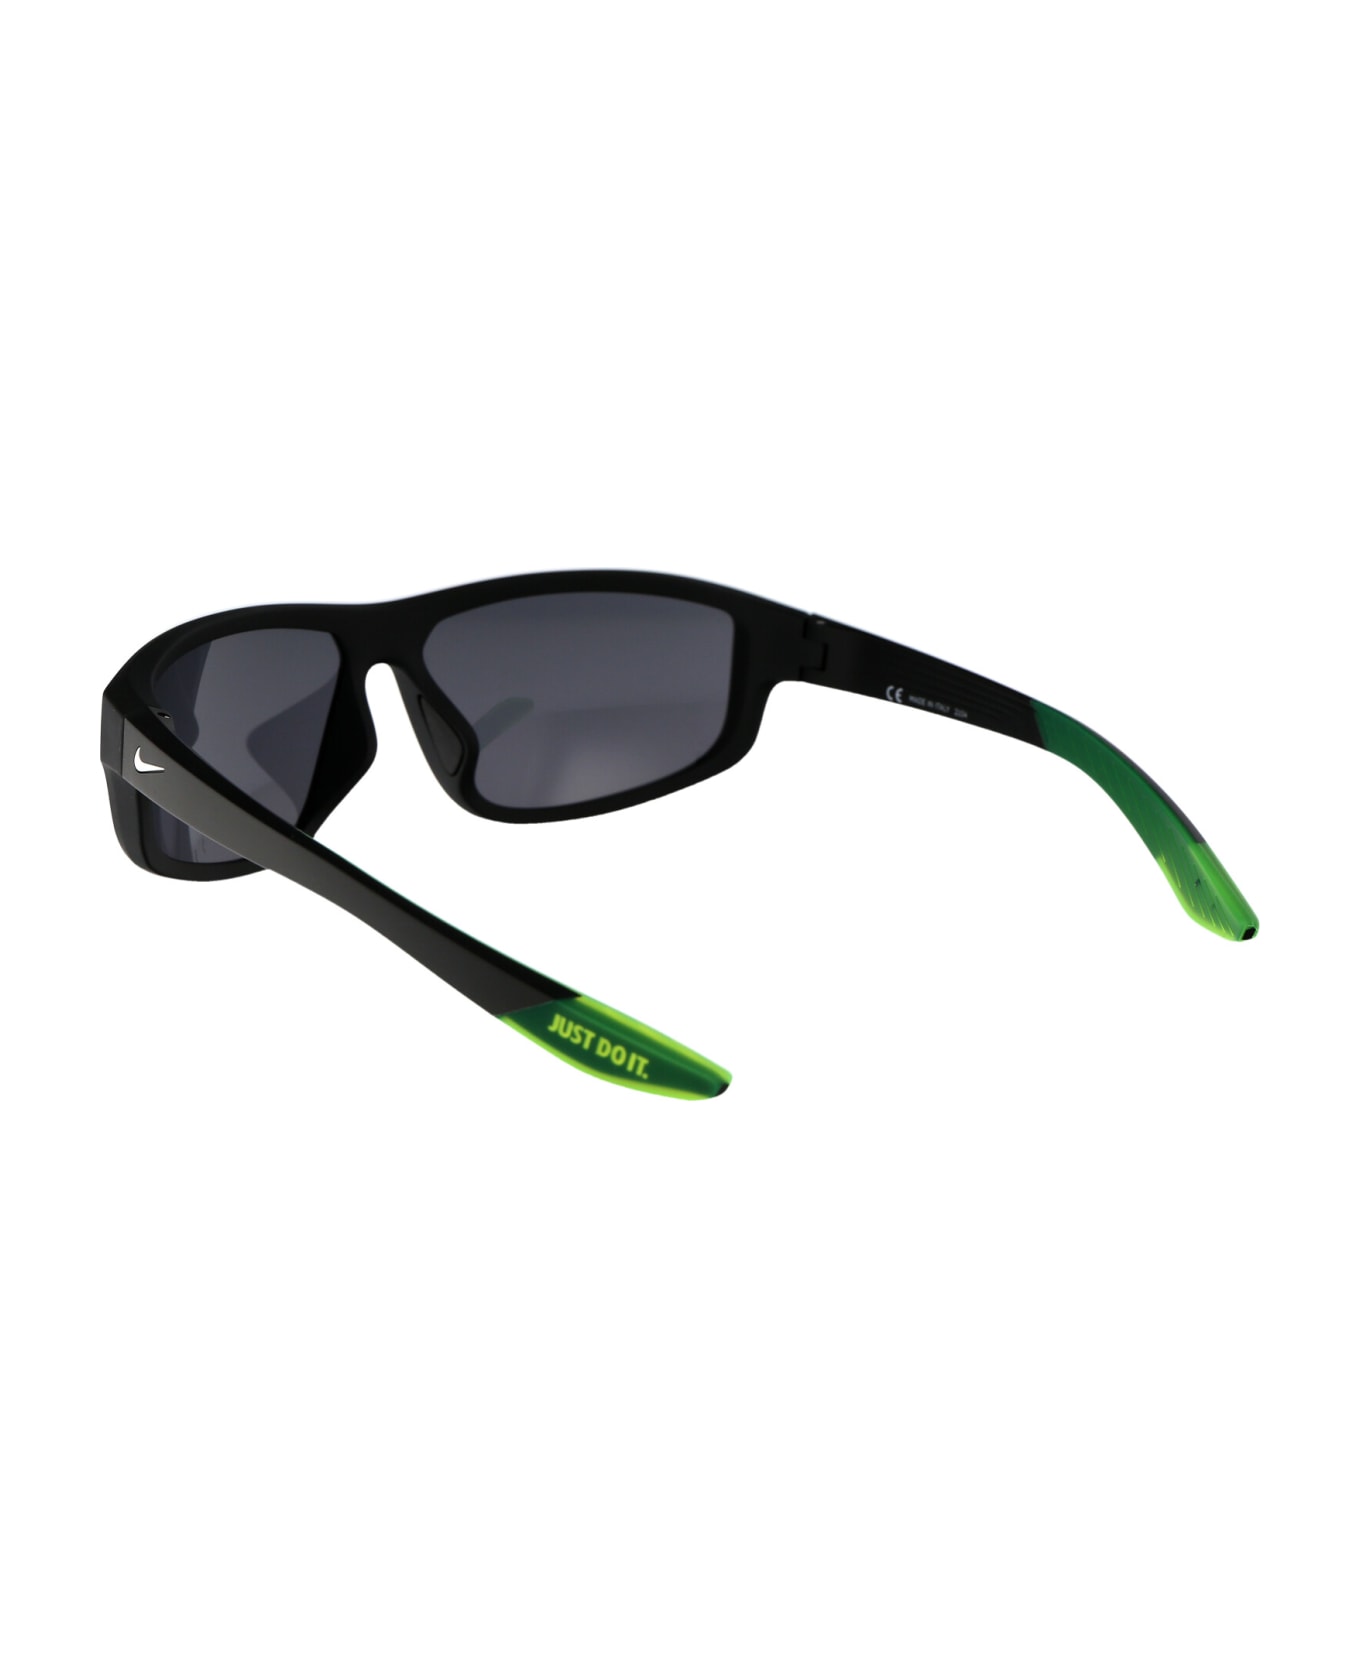 Nike Brazen Fuel Sunglasses - 010 MATTE BLACK GREEN